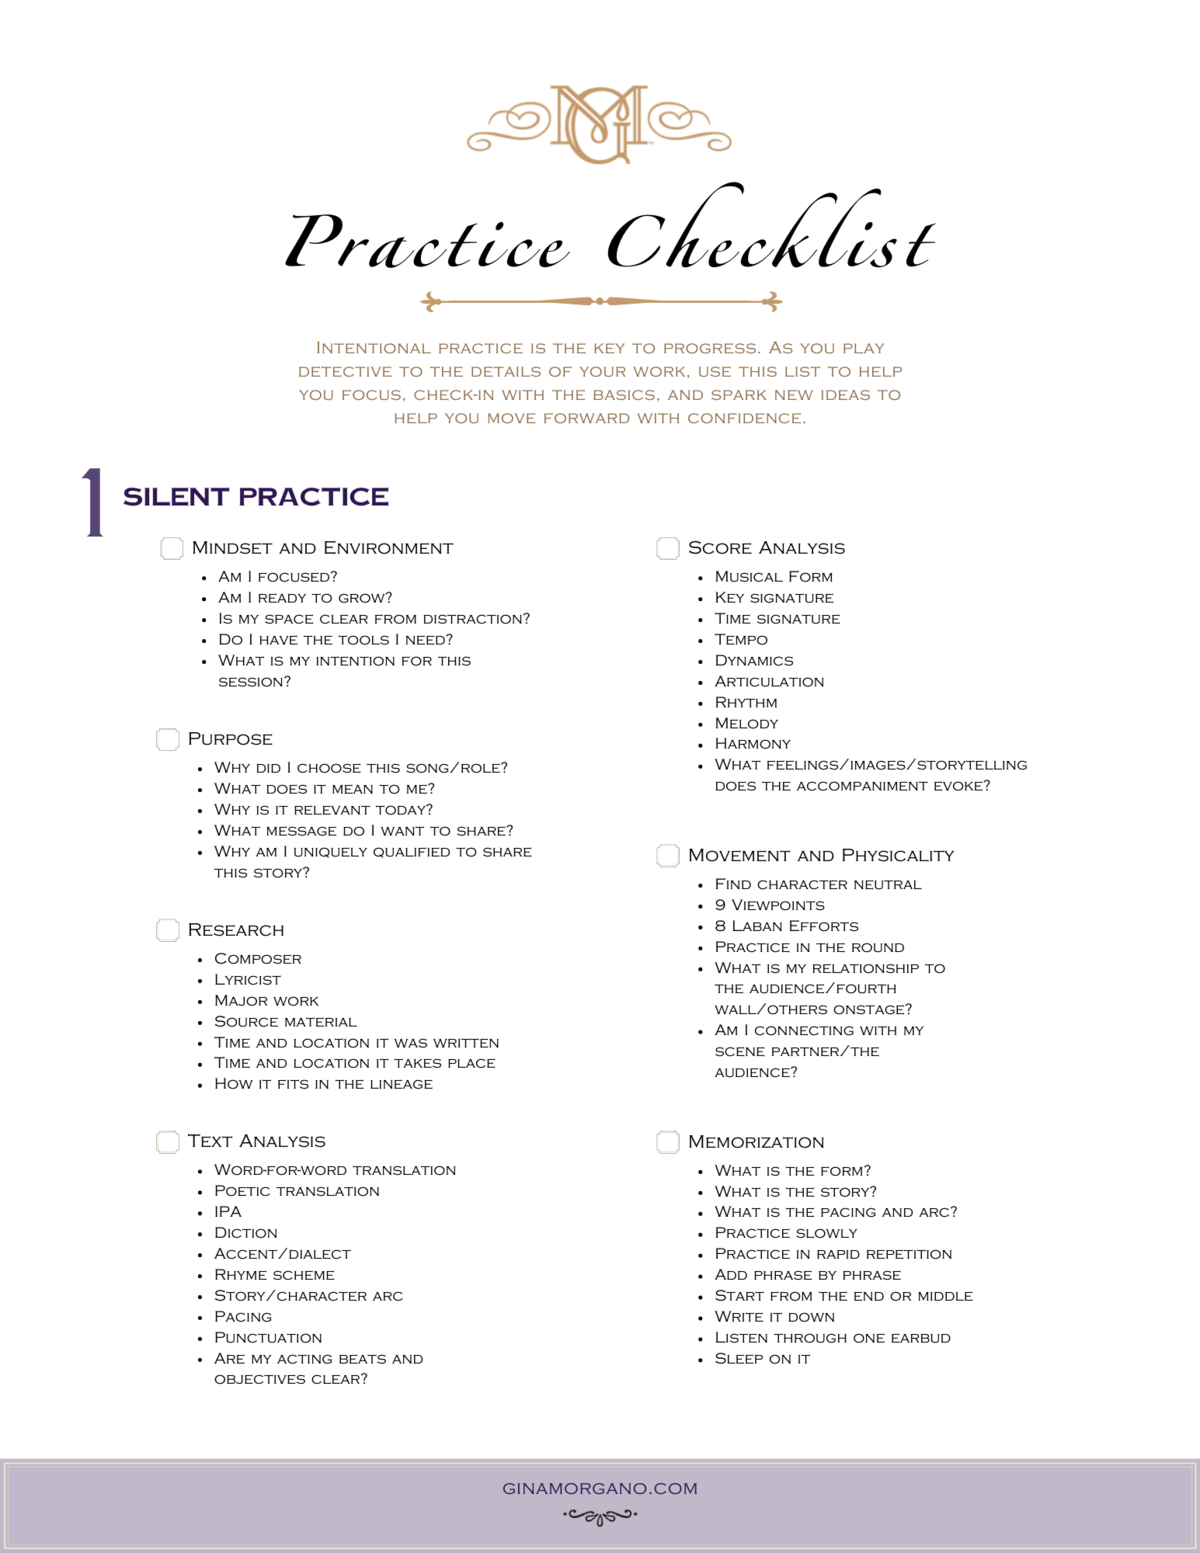 Gina Morgano - Practice Checklist